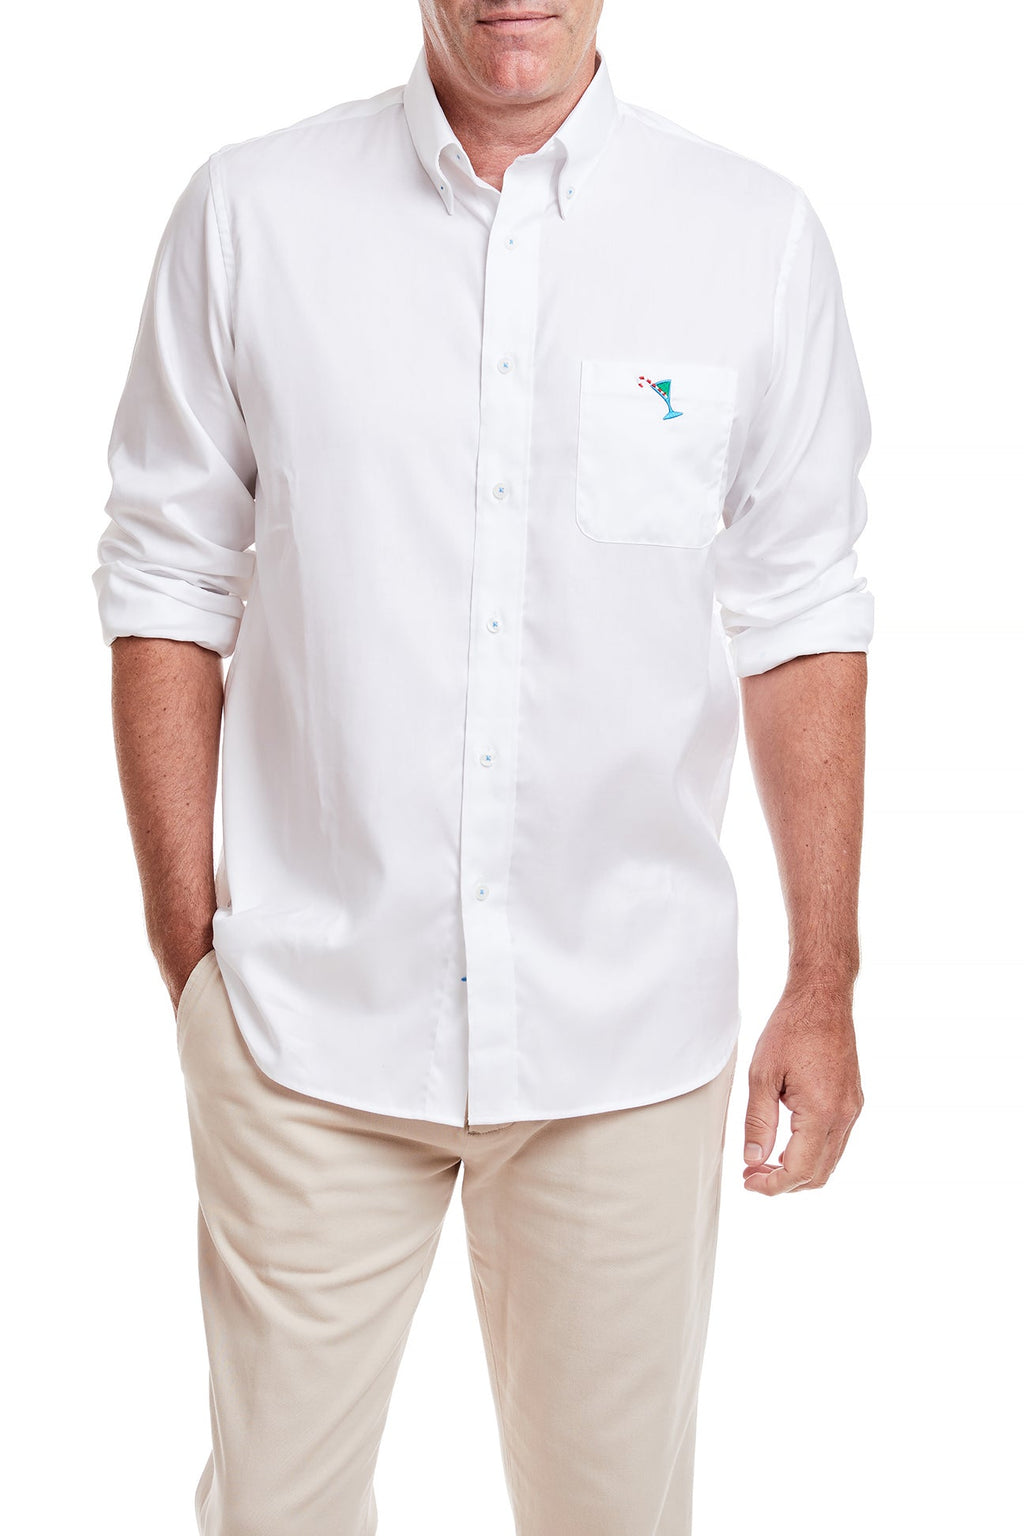 BETTER GIFT SHOP + Sherwood Logo-Appliquéd Striped Jersey T-Shirt for Men